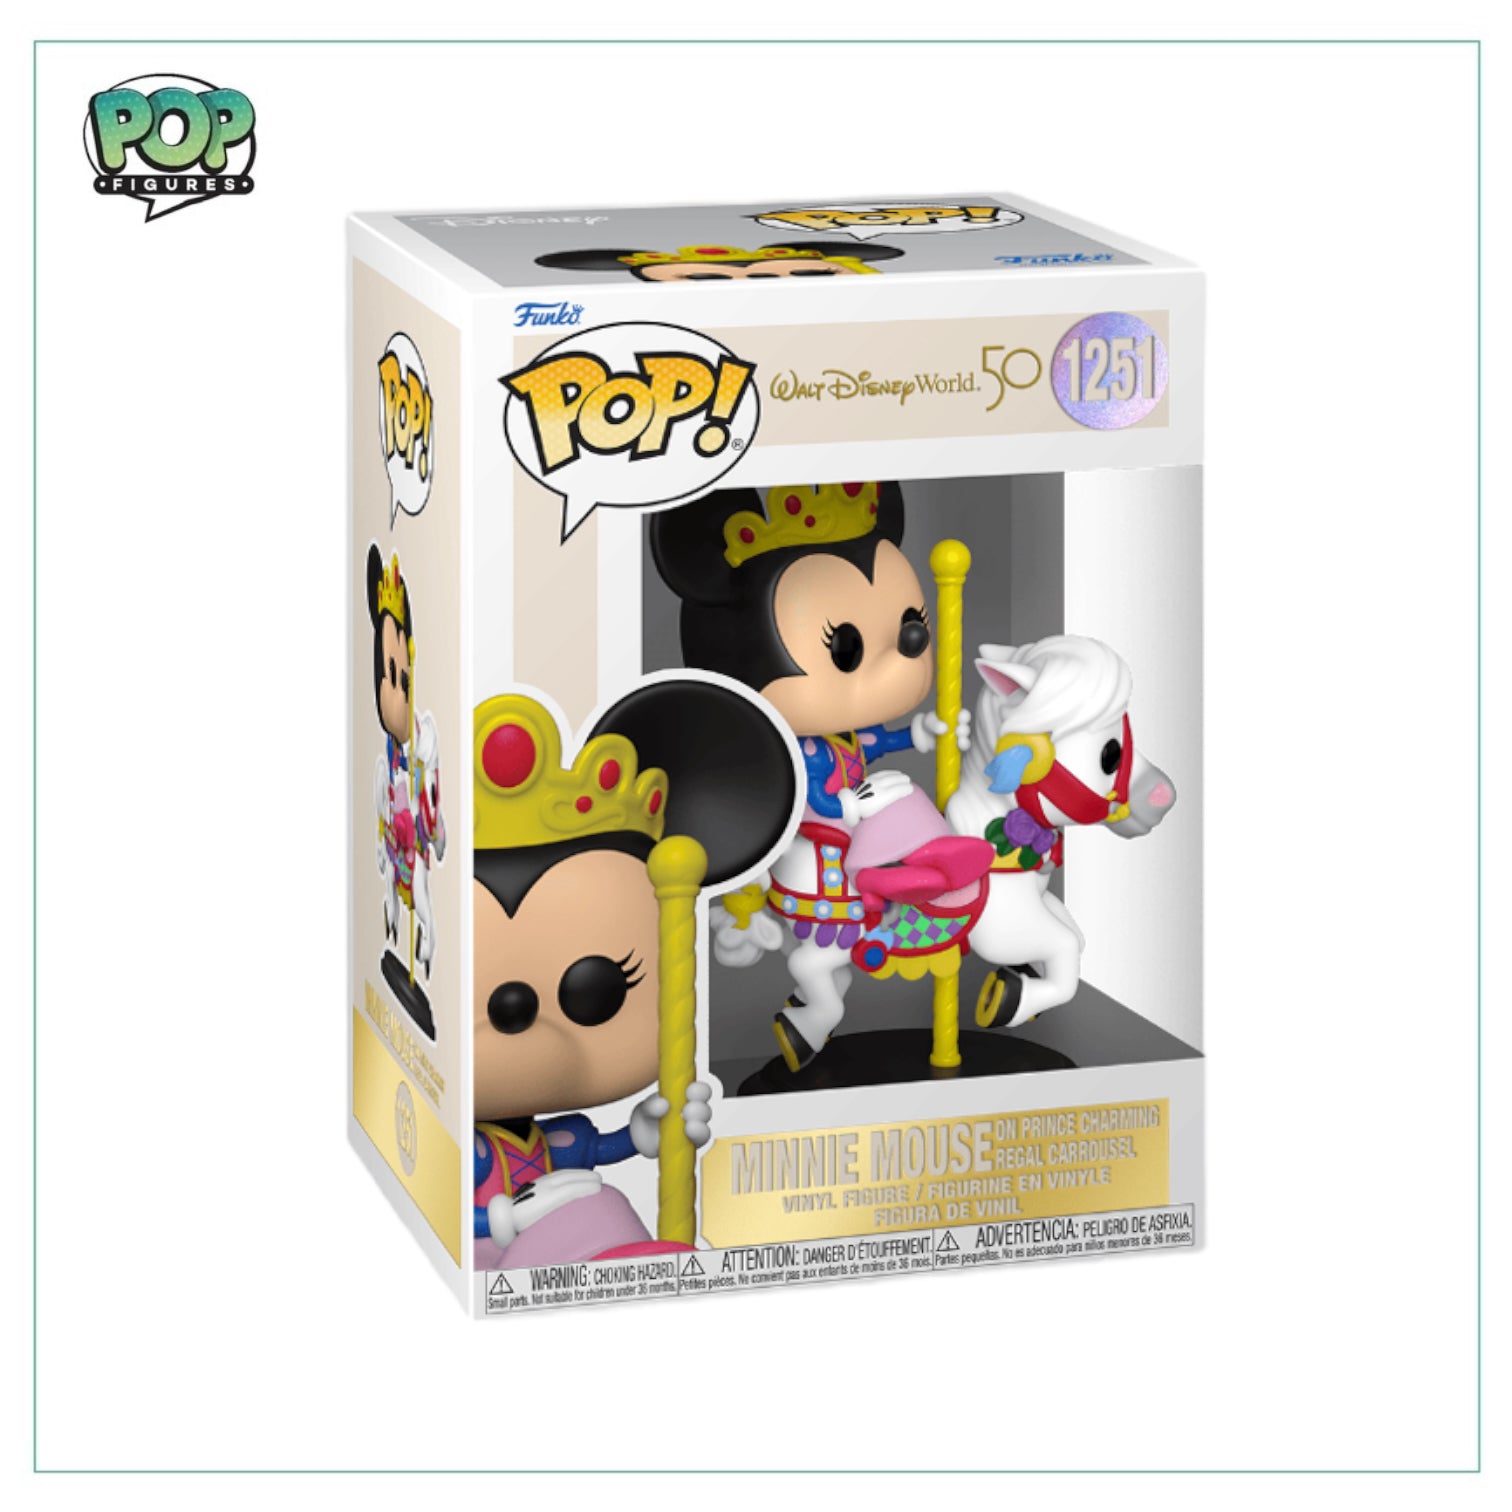 Minnie Mouse on Price Charming Regal Carrousel #1251 Funko Pop! - Walt Disney World 50th